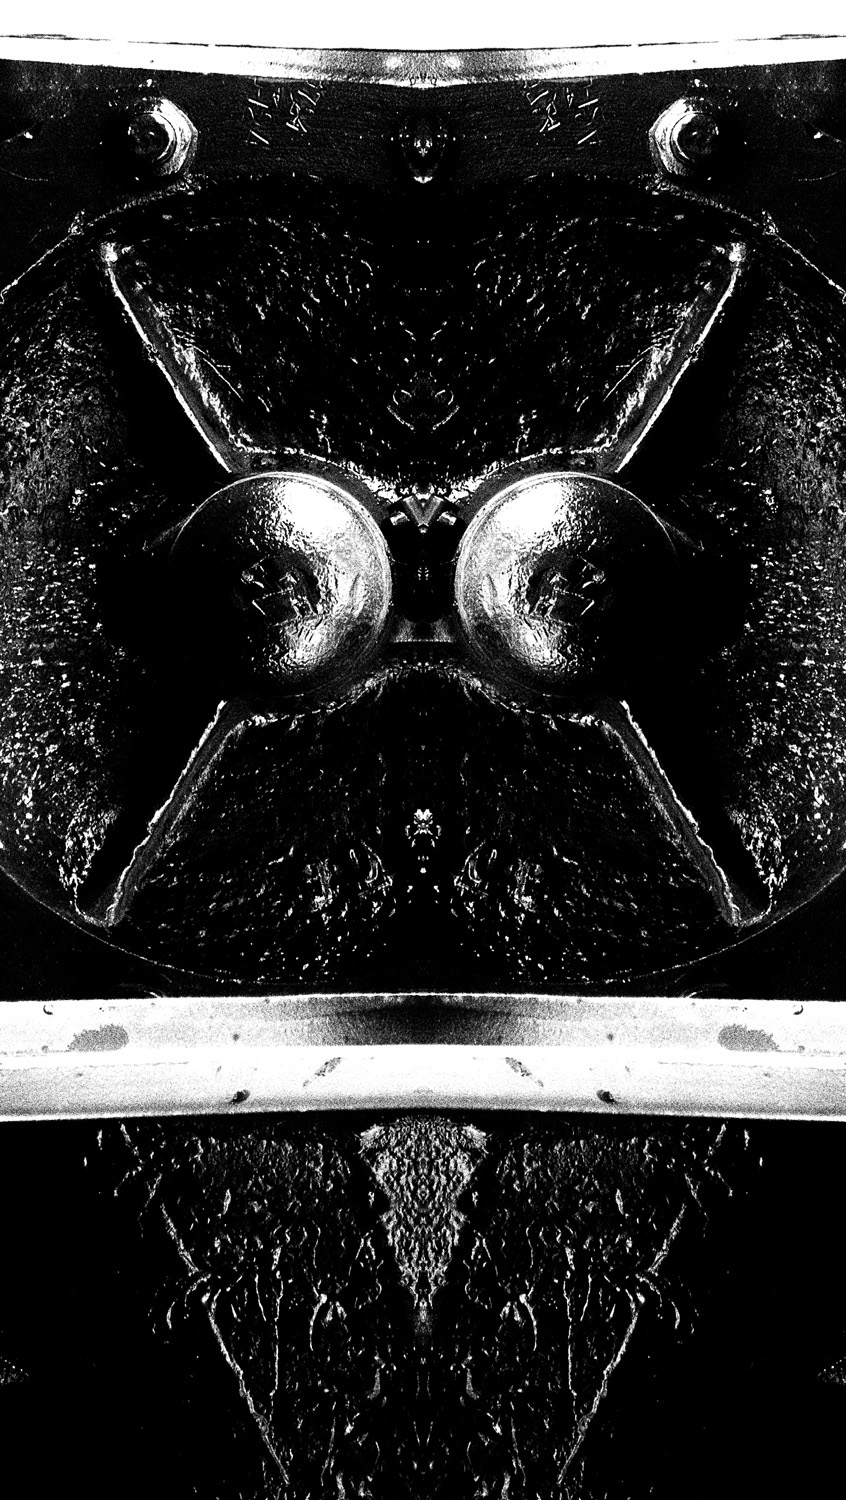 art photography dark black & white symmetry exposition art kaleidoscope industrial train maschine kristina gentvainyte cold surreal lithuania belgium